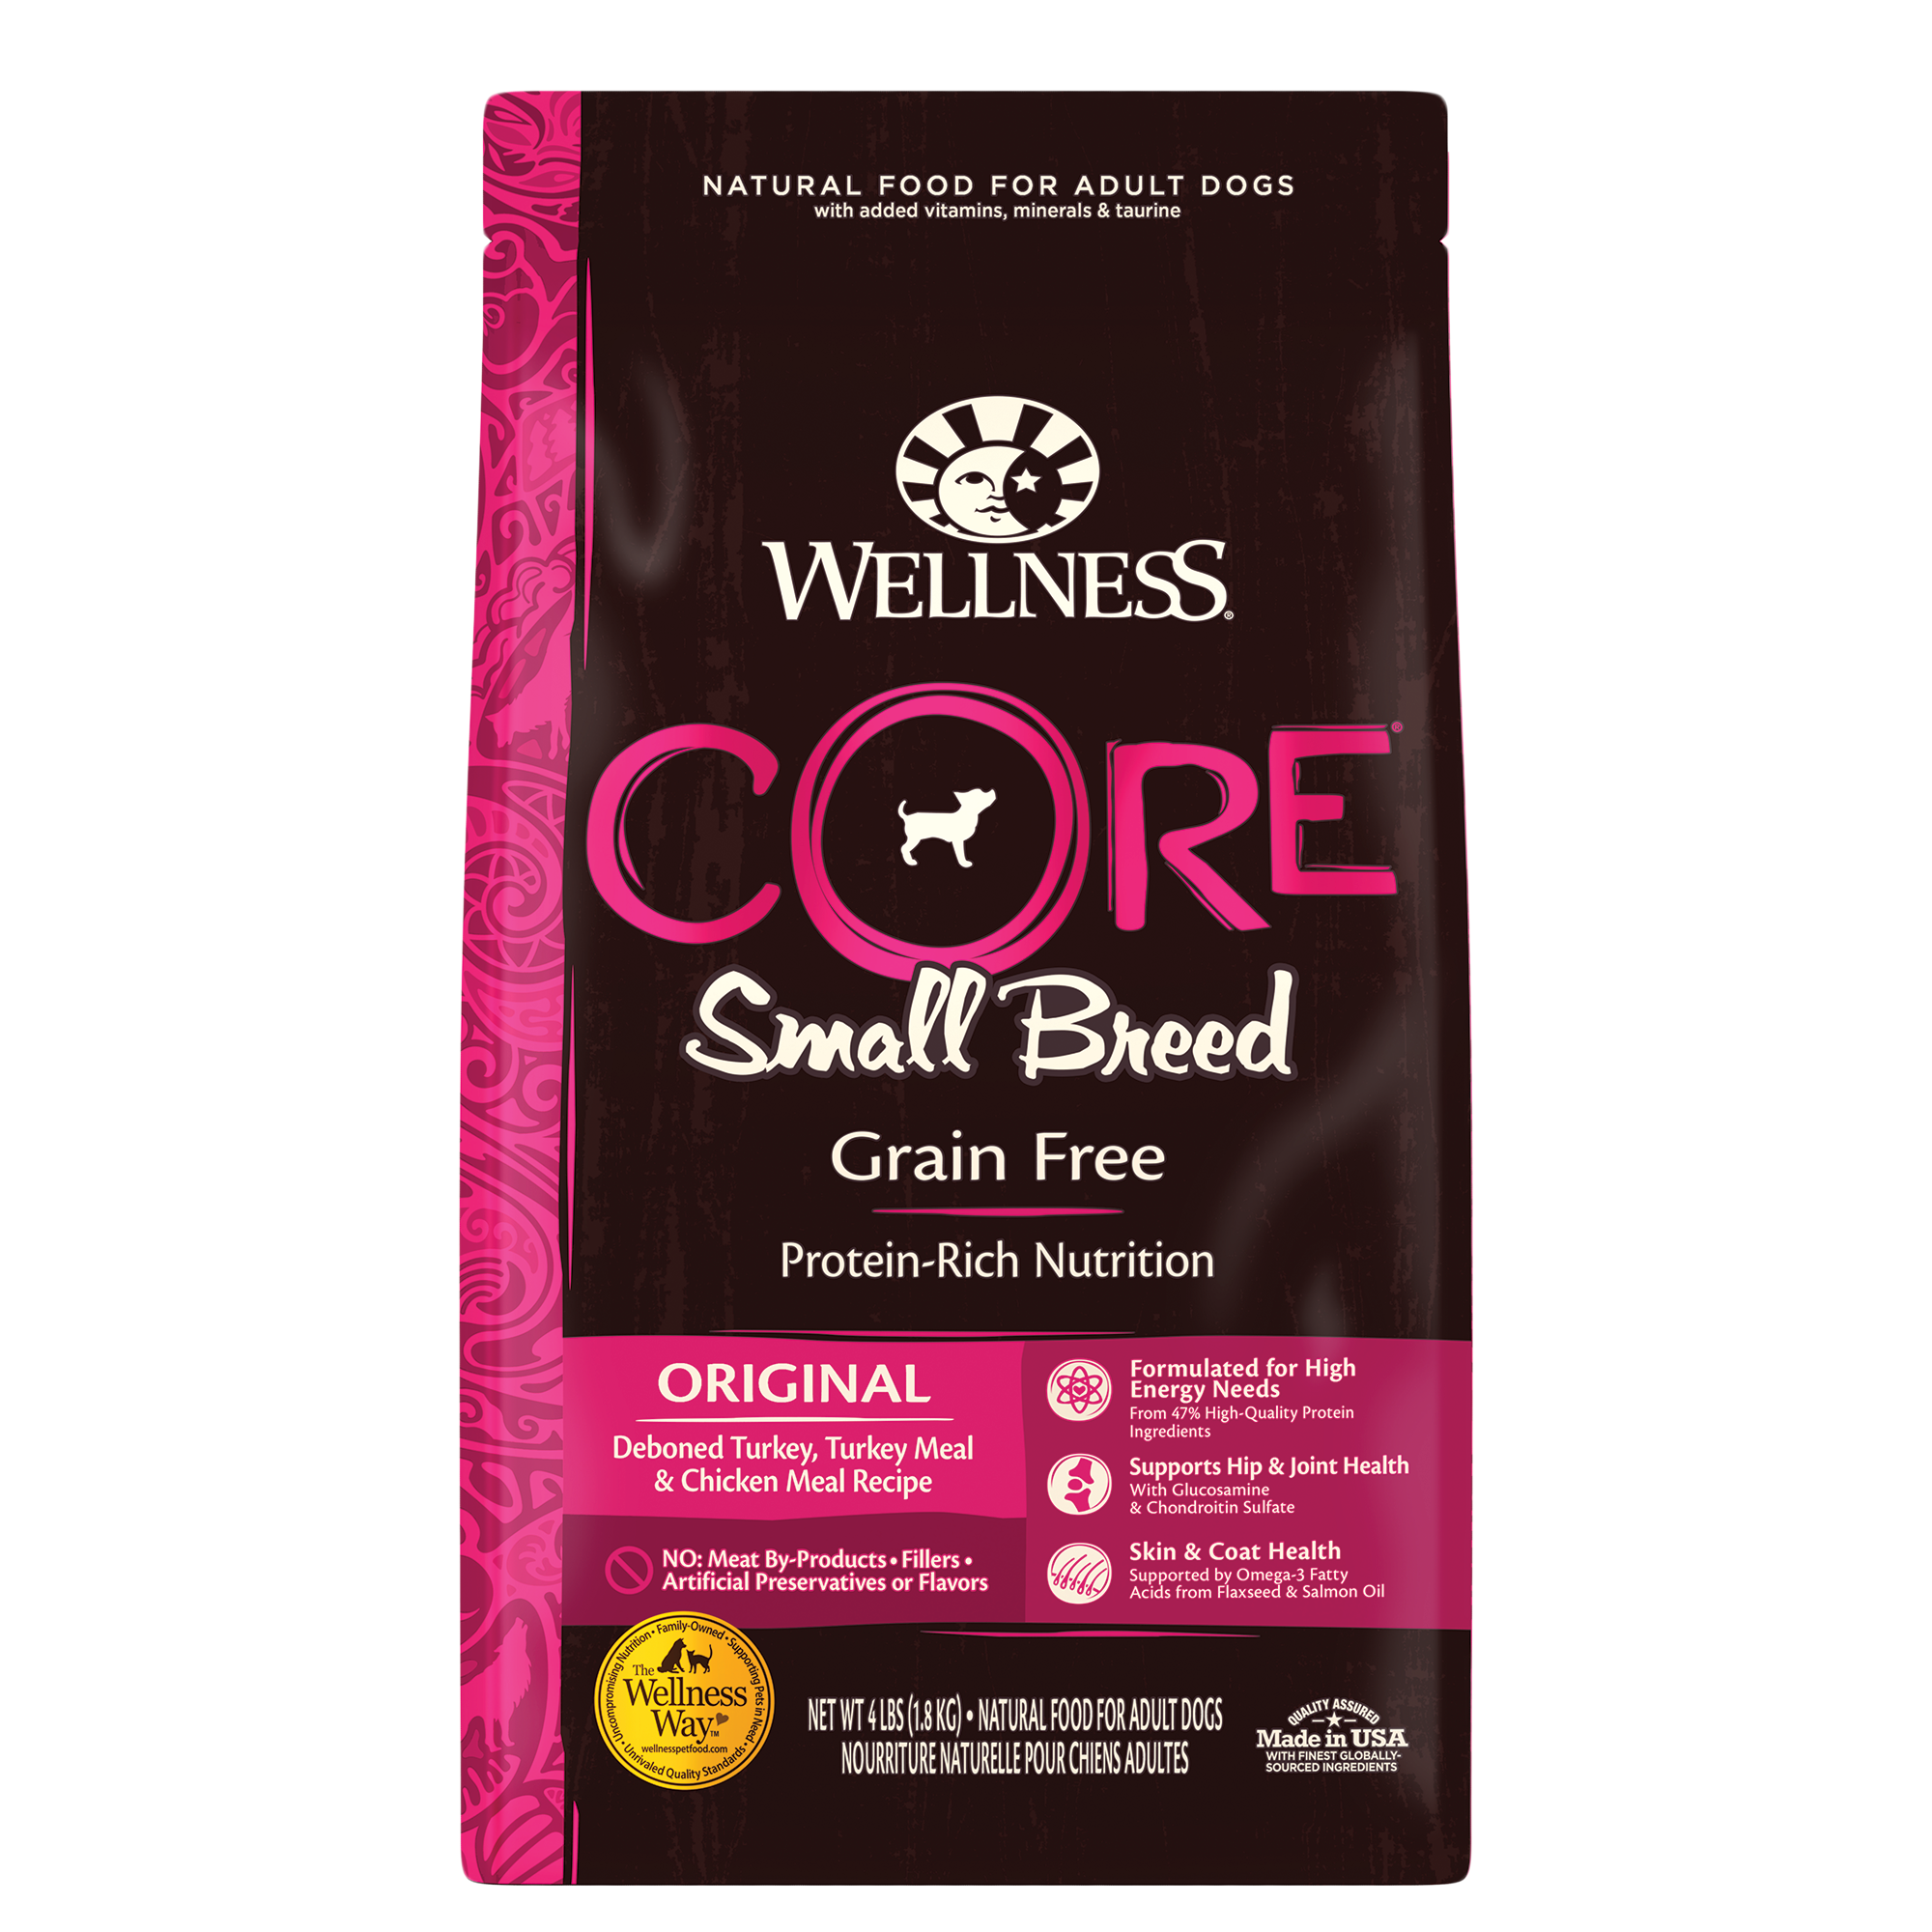 Wellness Core Small Breed Original GF Dog Food